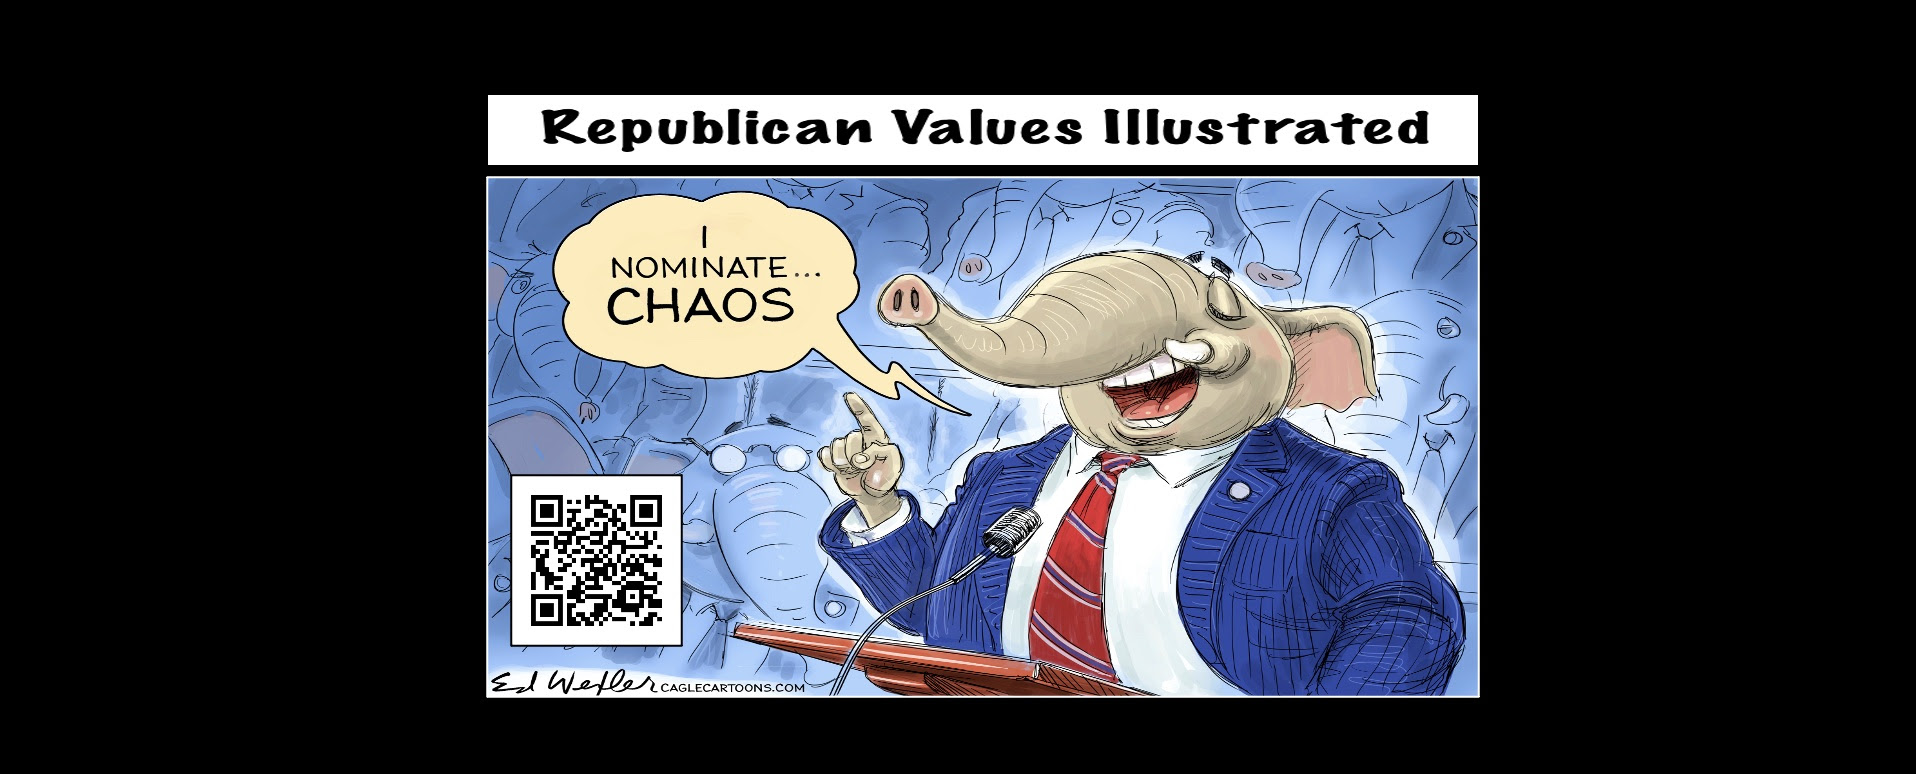 Republican values illustrated